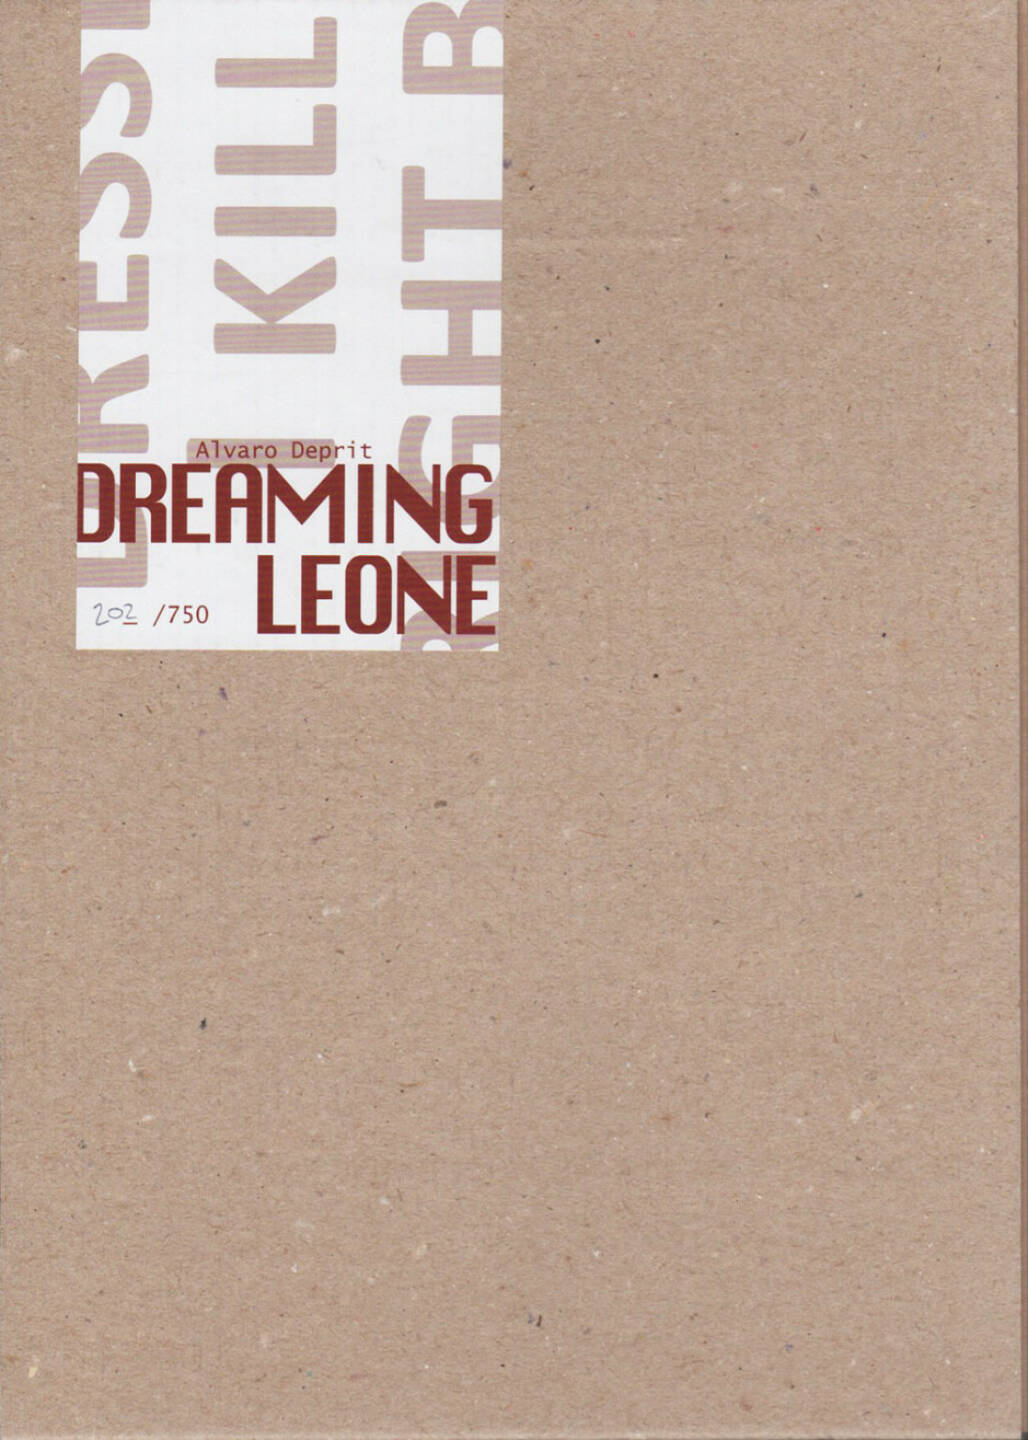 Alvaro Deprit - Dreaming Leone, Self published 2014, Cover - http://josefchladek.com/book/alvaro_deprit_-_dreaming_leone